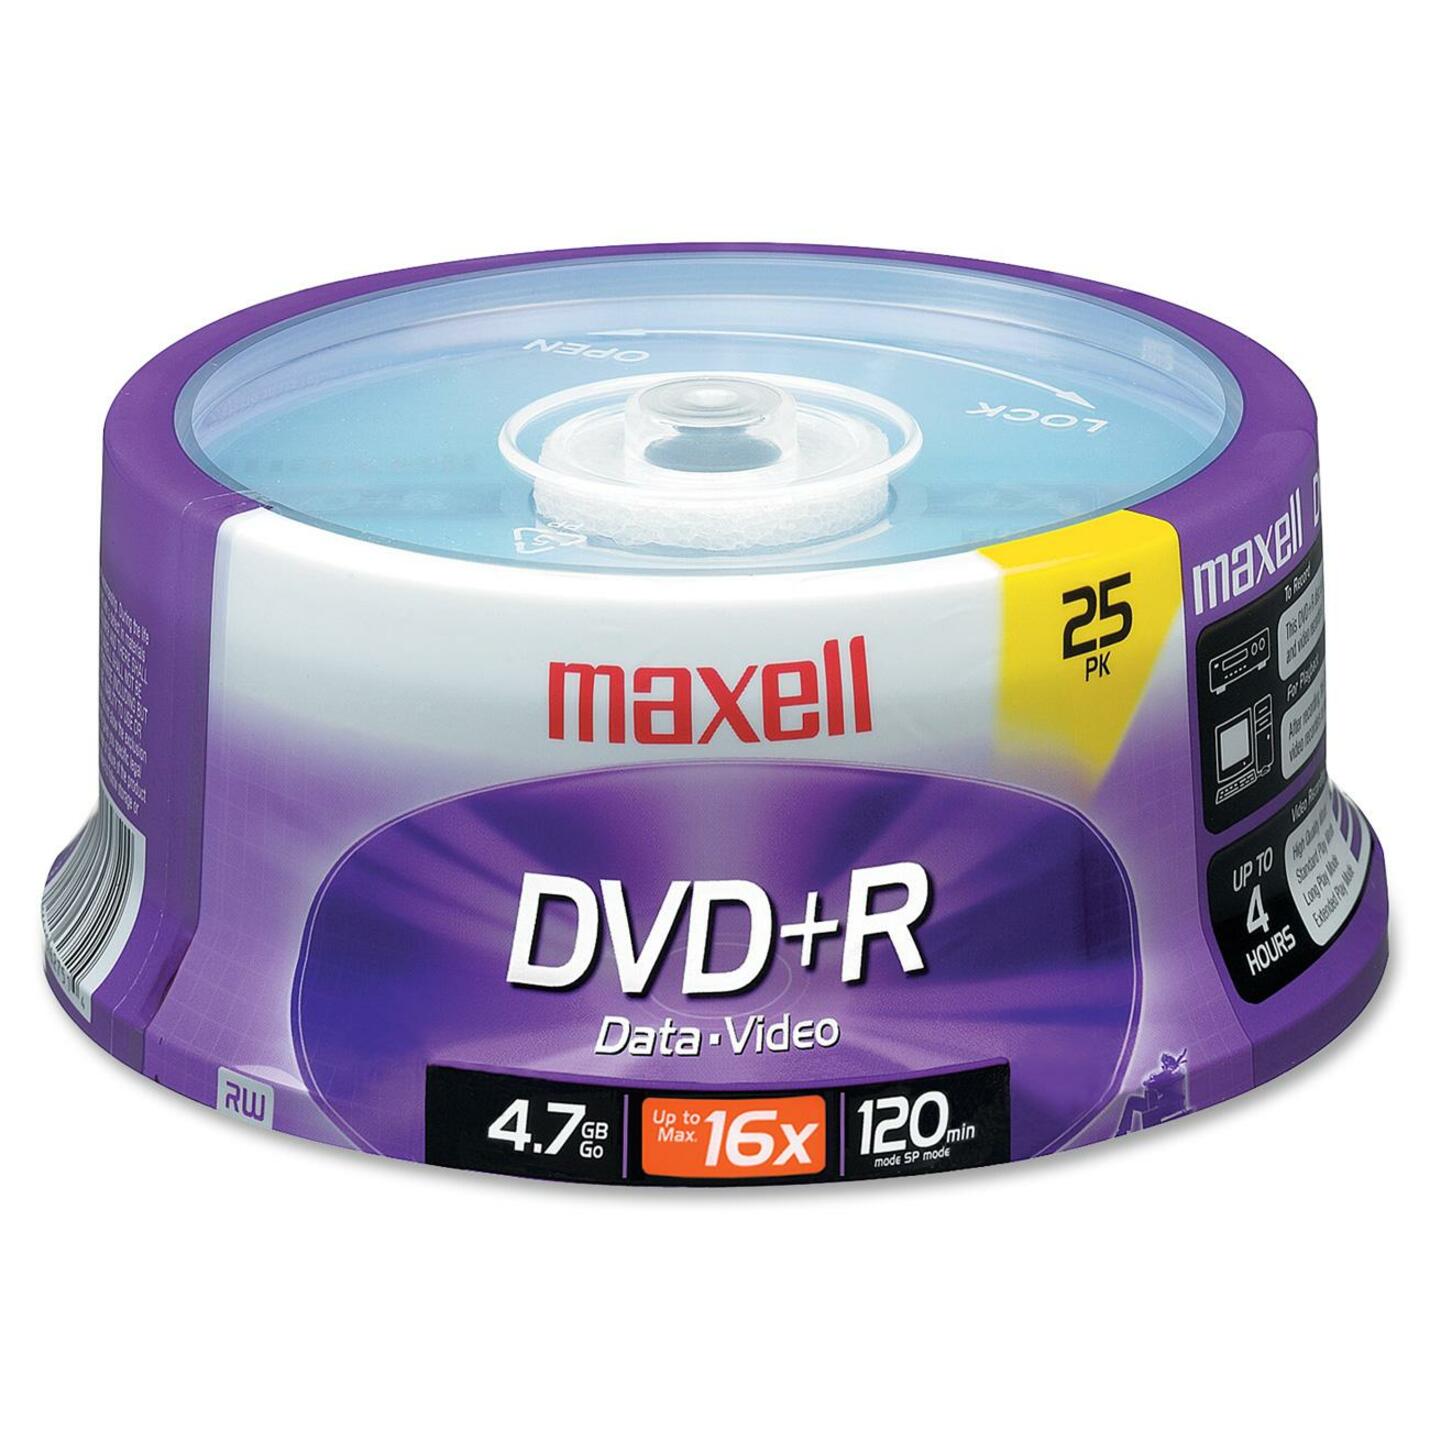 Maxell 639011 16x DVD+R Media, 4.7GB Data Storage, 25/PK